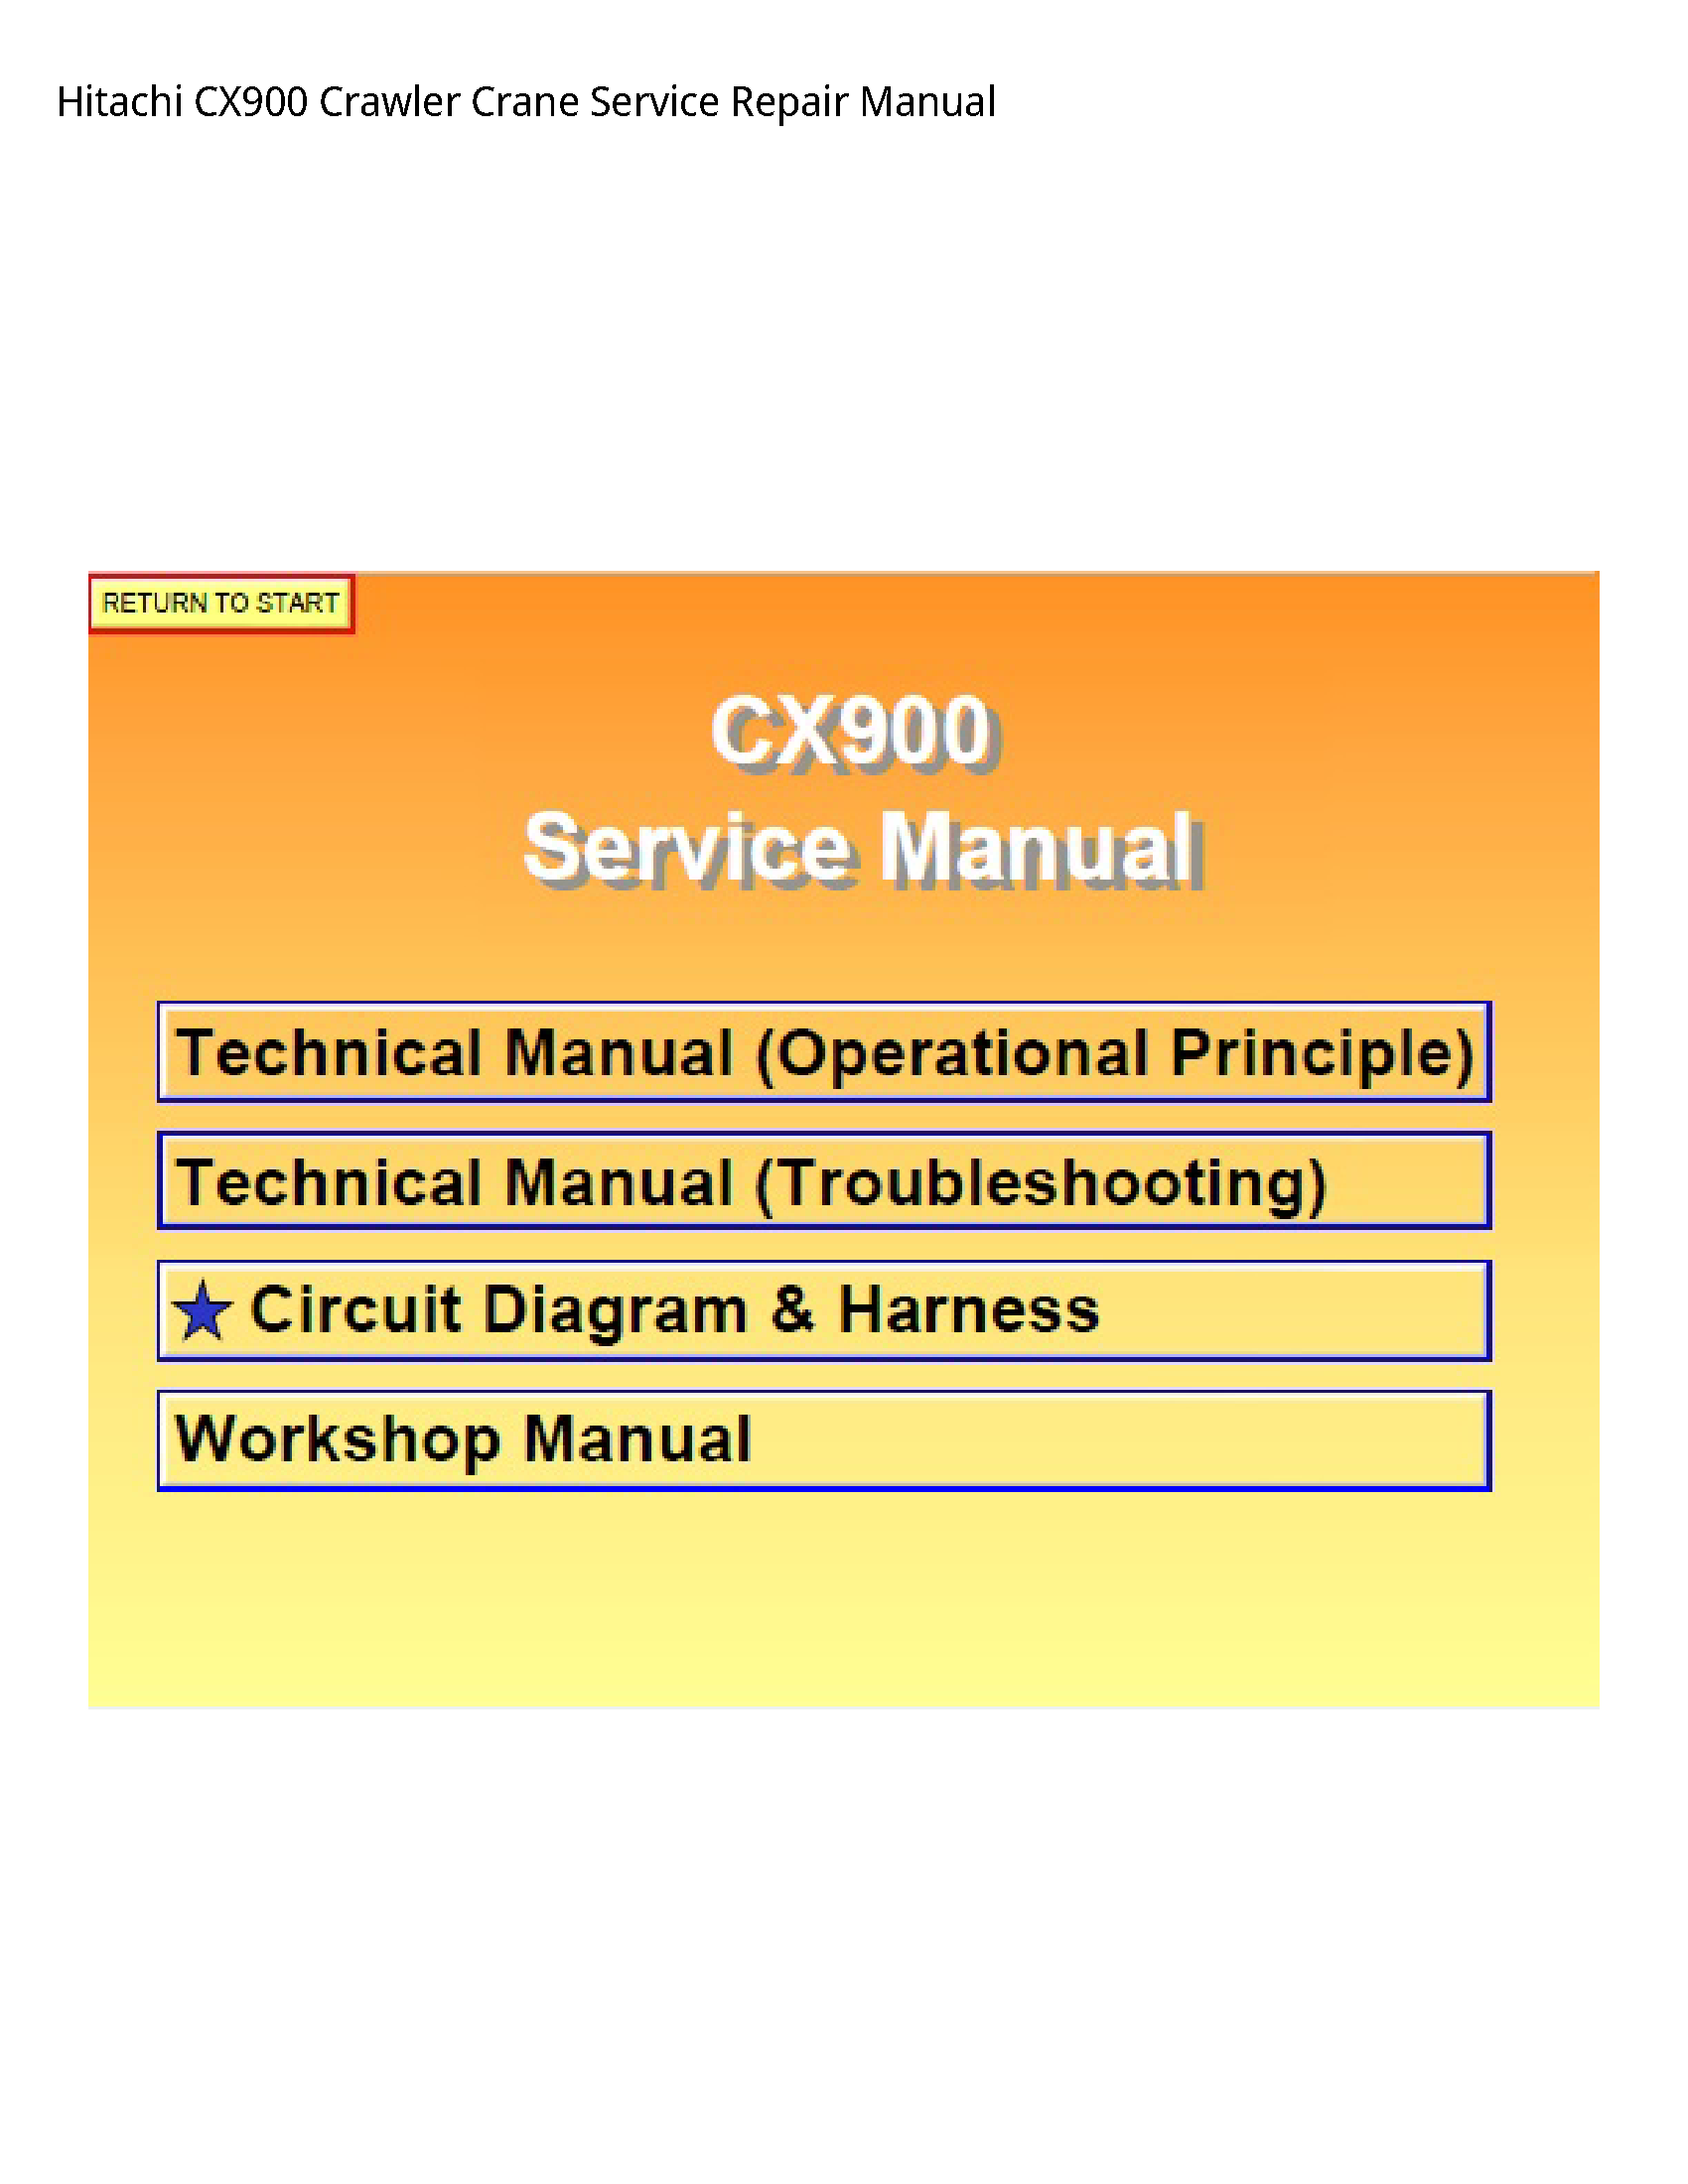 Hitachi CX900 Crawler Crane manual